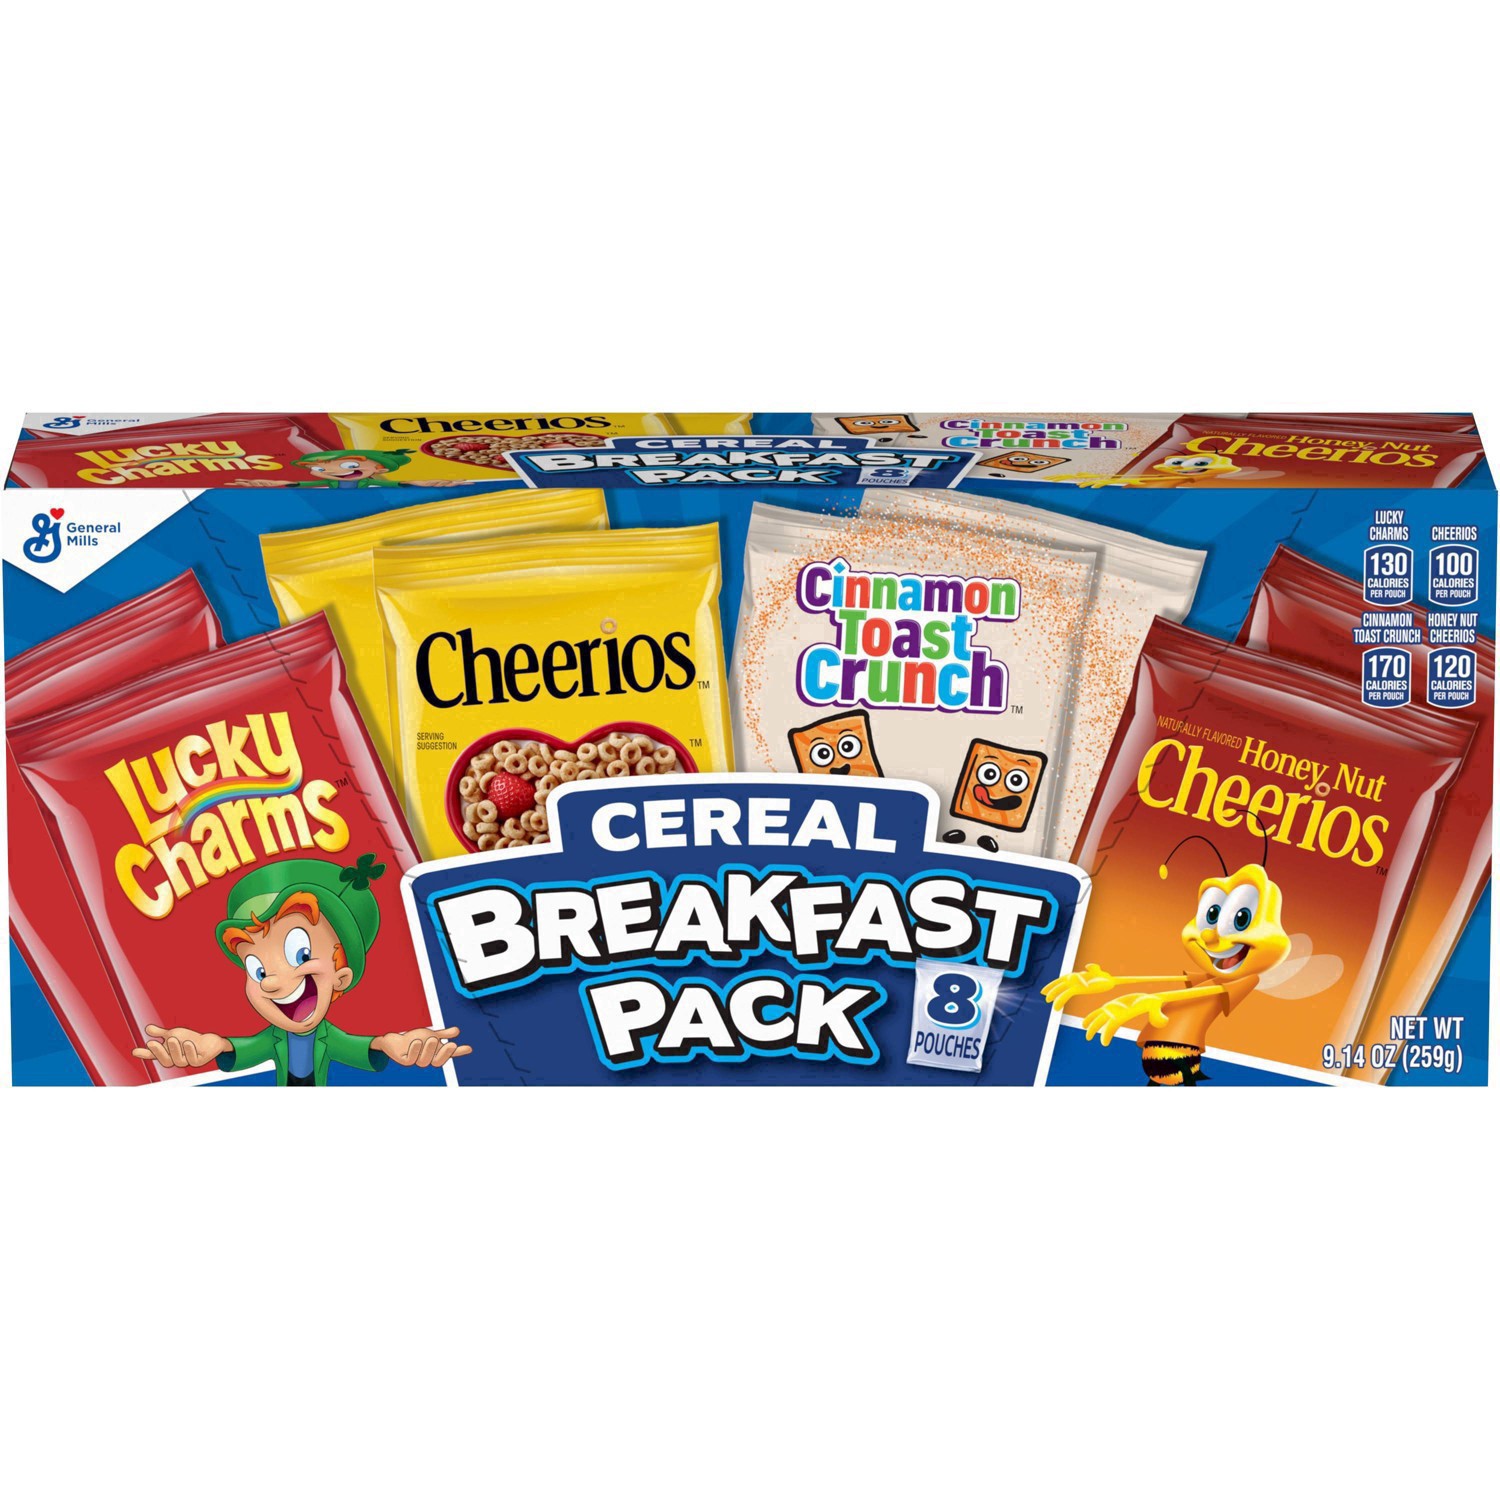 slide 34 of 141, General Mills Breakfast Pack Cereal, 8 ct